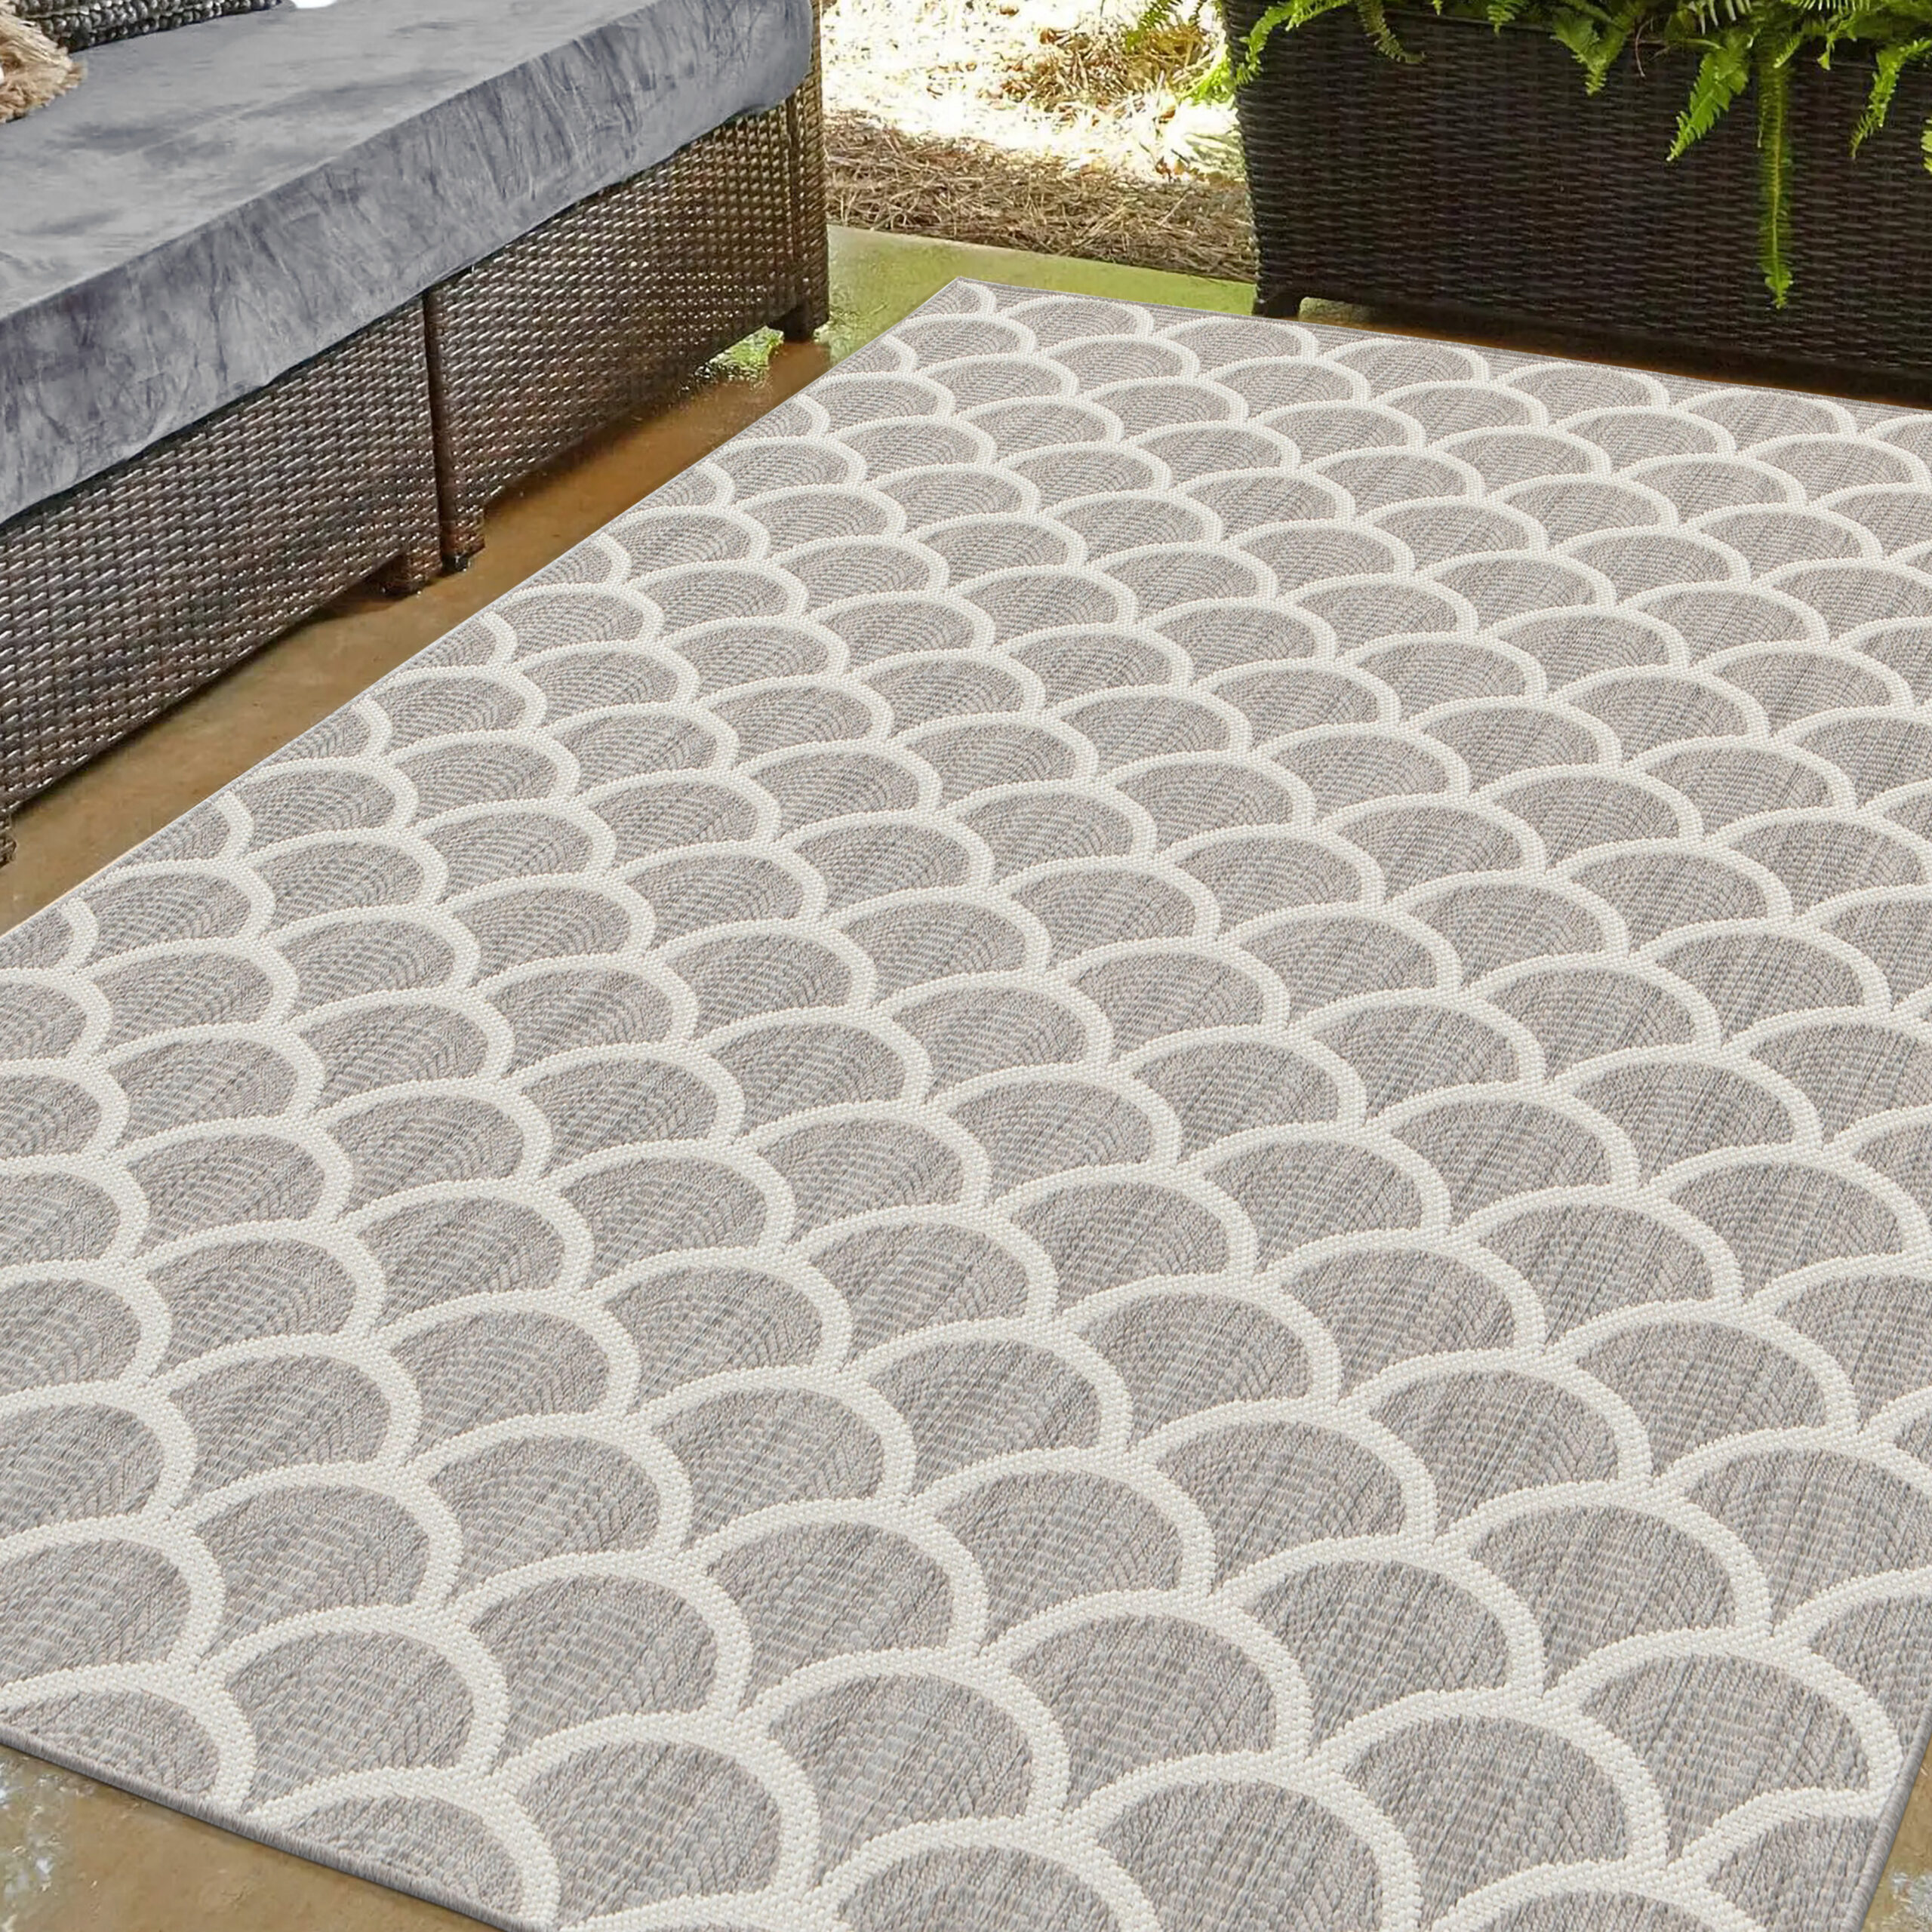 Modern geometric outdoor area botanical rug design.